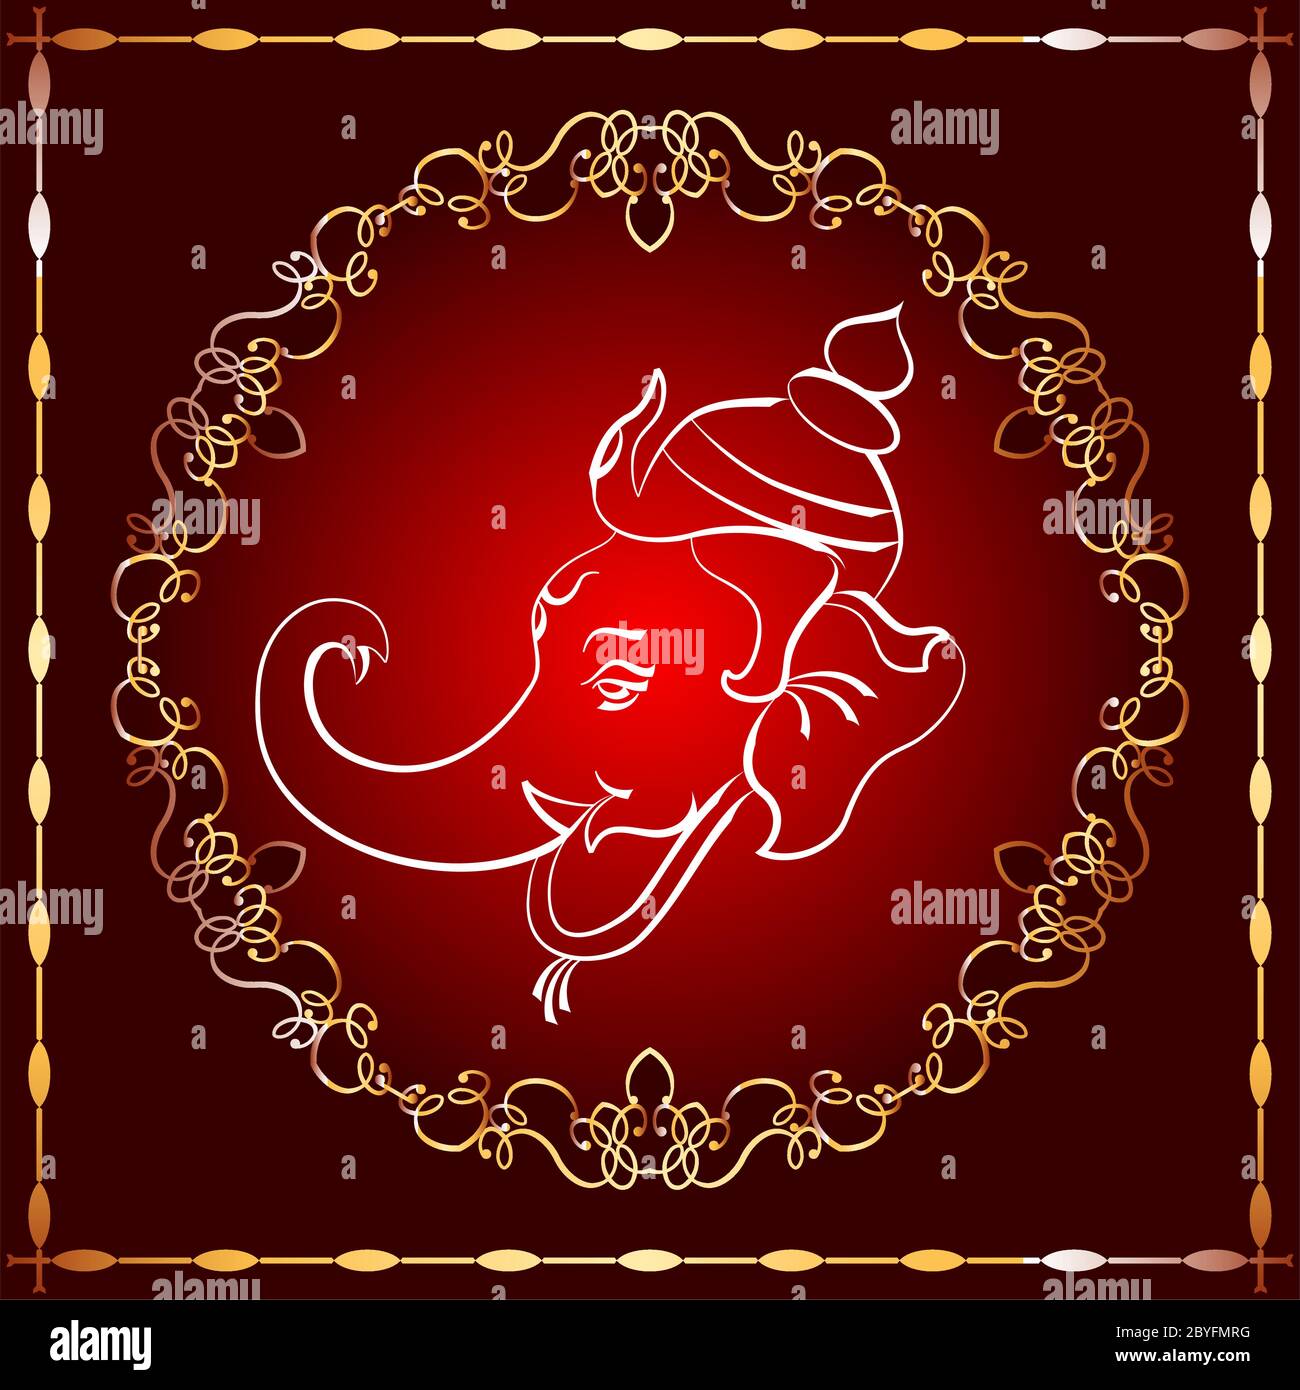 Ganesha The Lord Of Wisdom Vector Illustration Stock Vector Image & Art ...